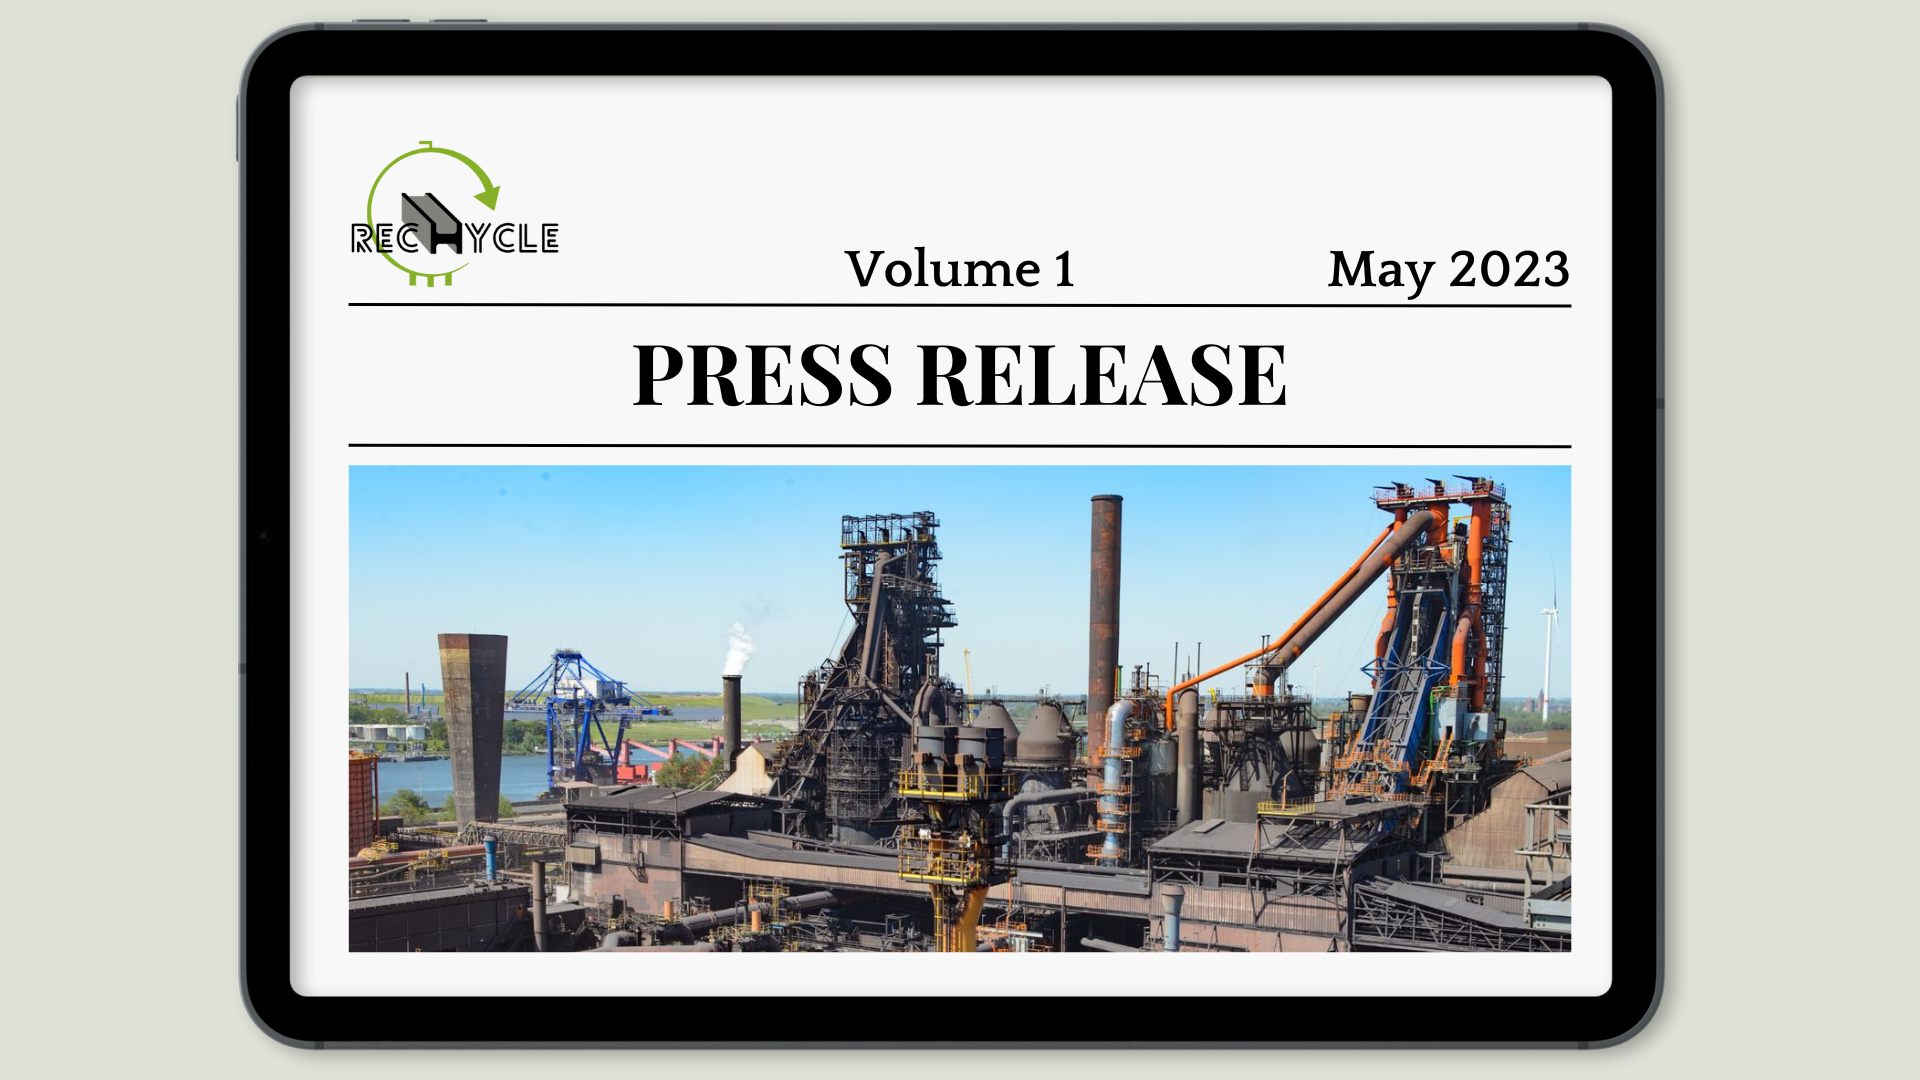 1st RecHycle Press Release